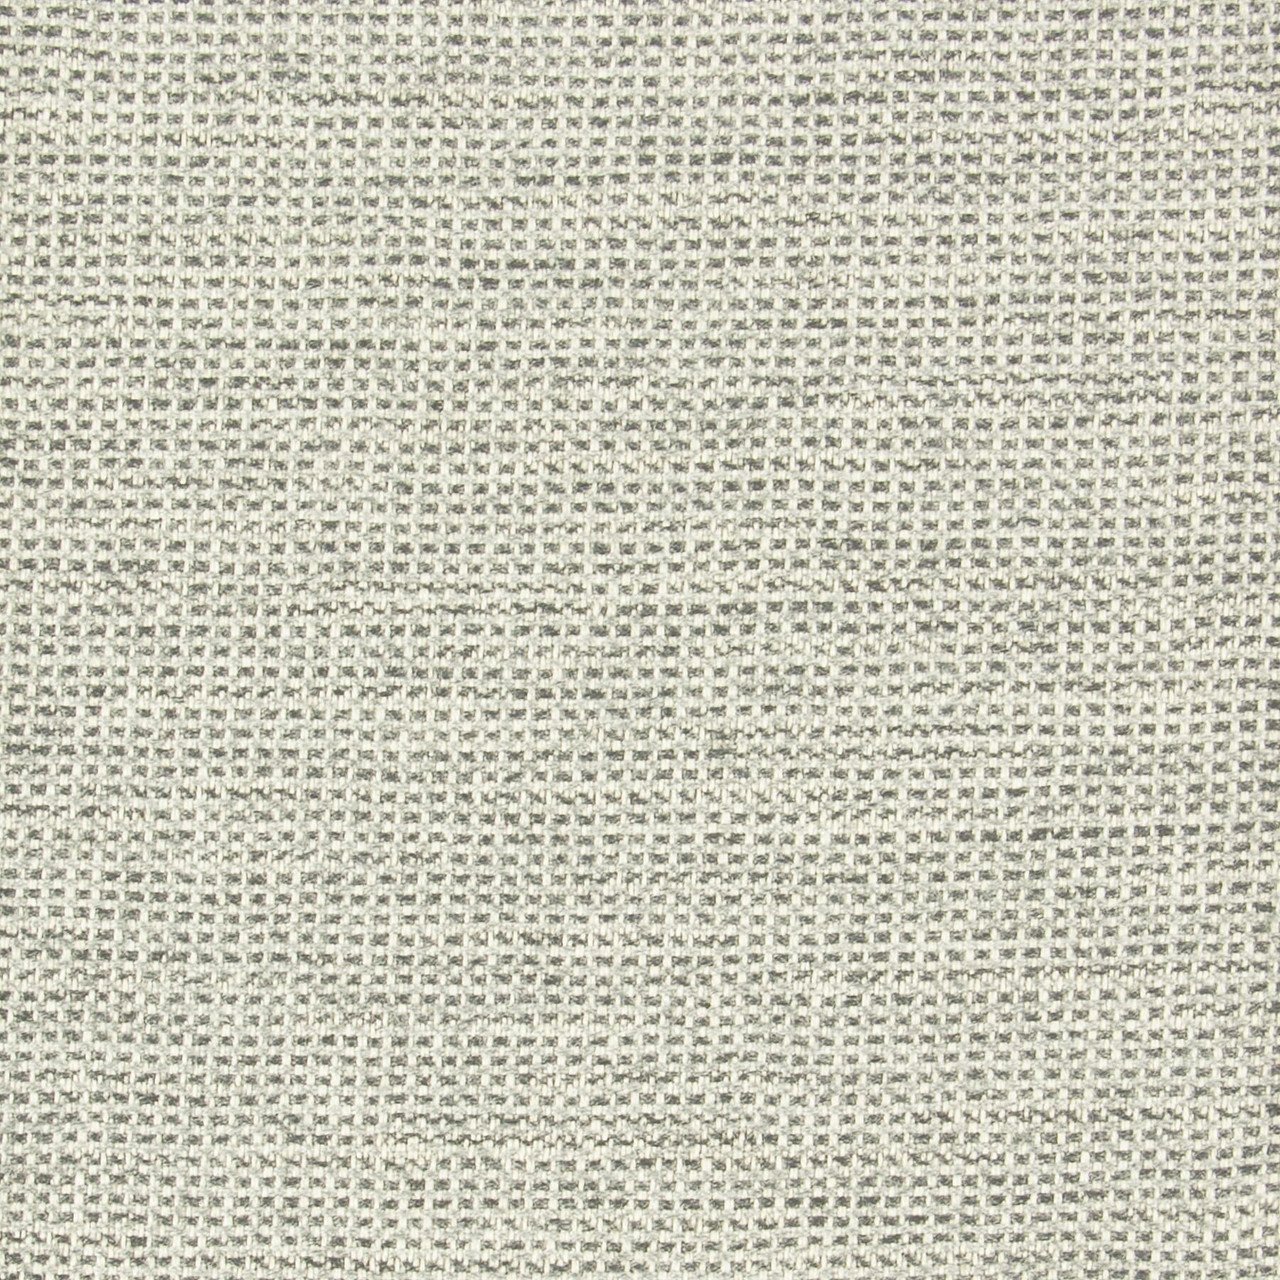 Sunbrella Fabric 6084 Slate